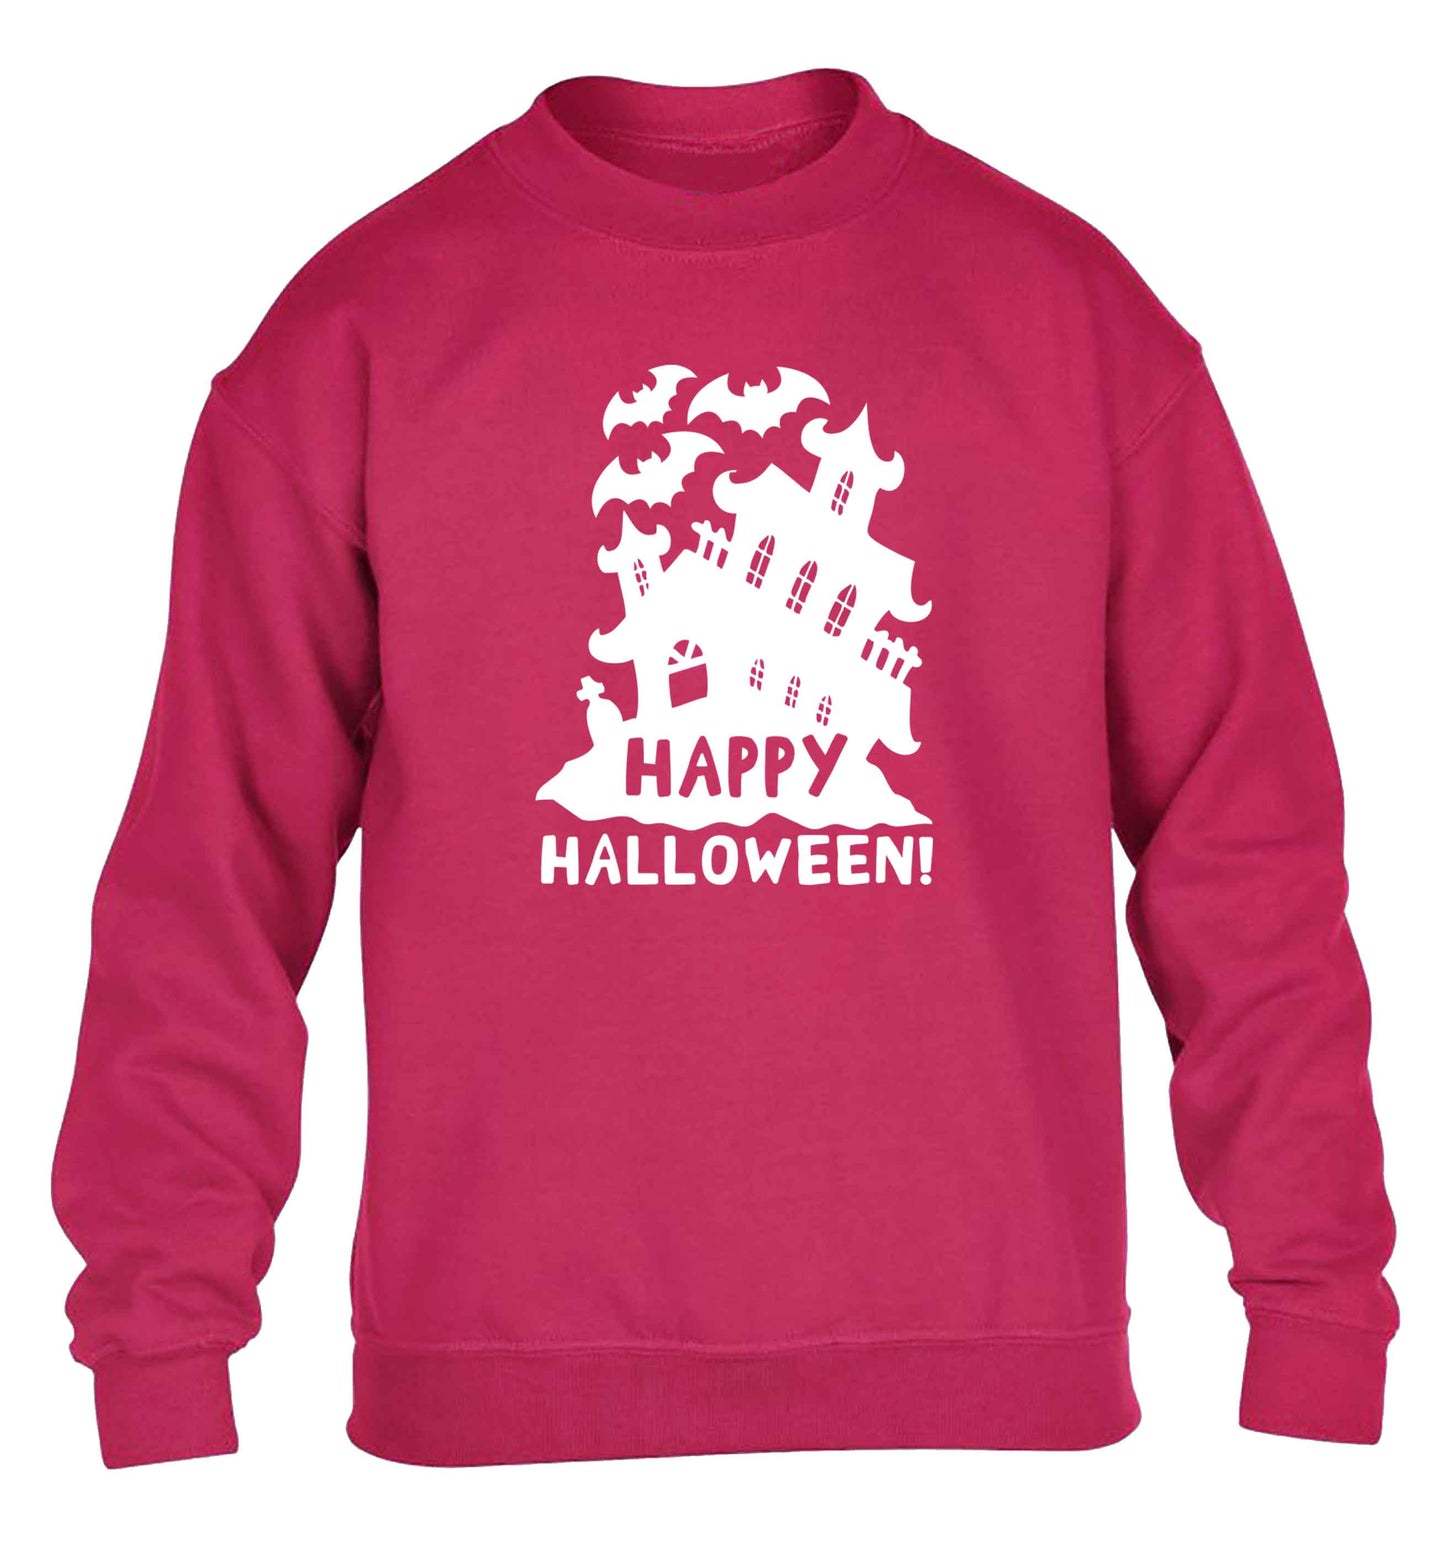 Happy halloween - haunted house children's pink sweater 12-13 Years